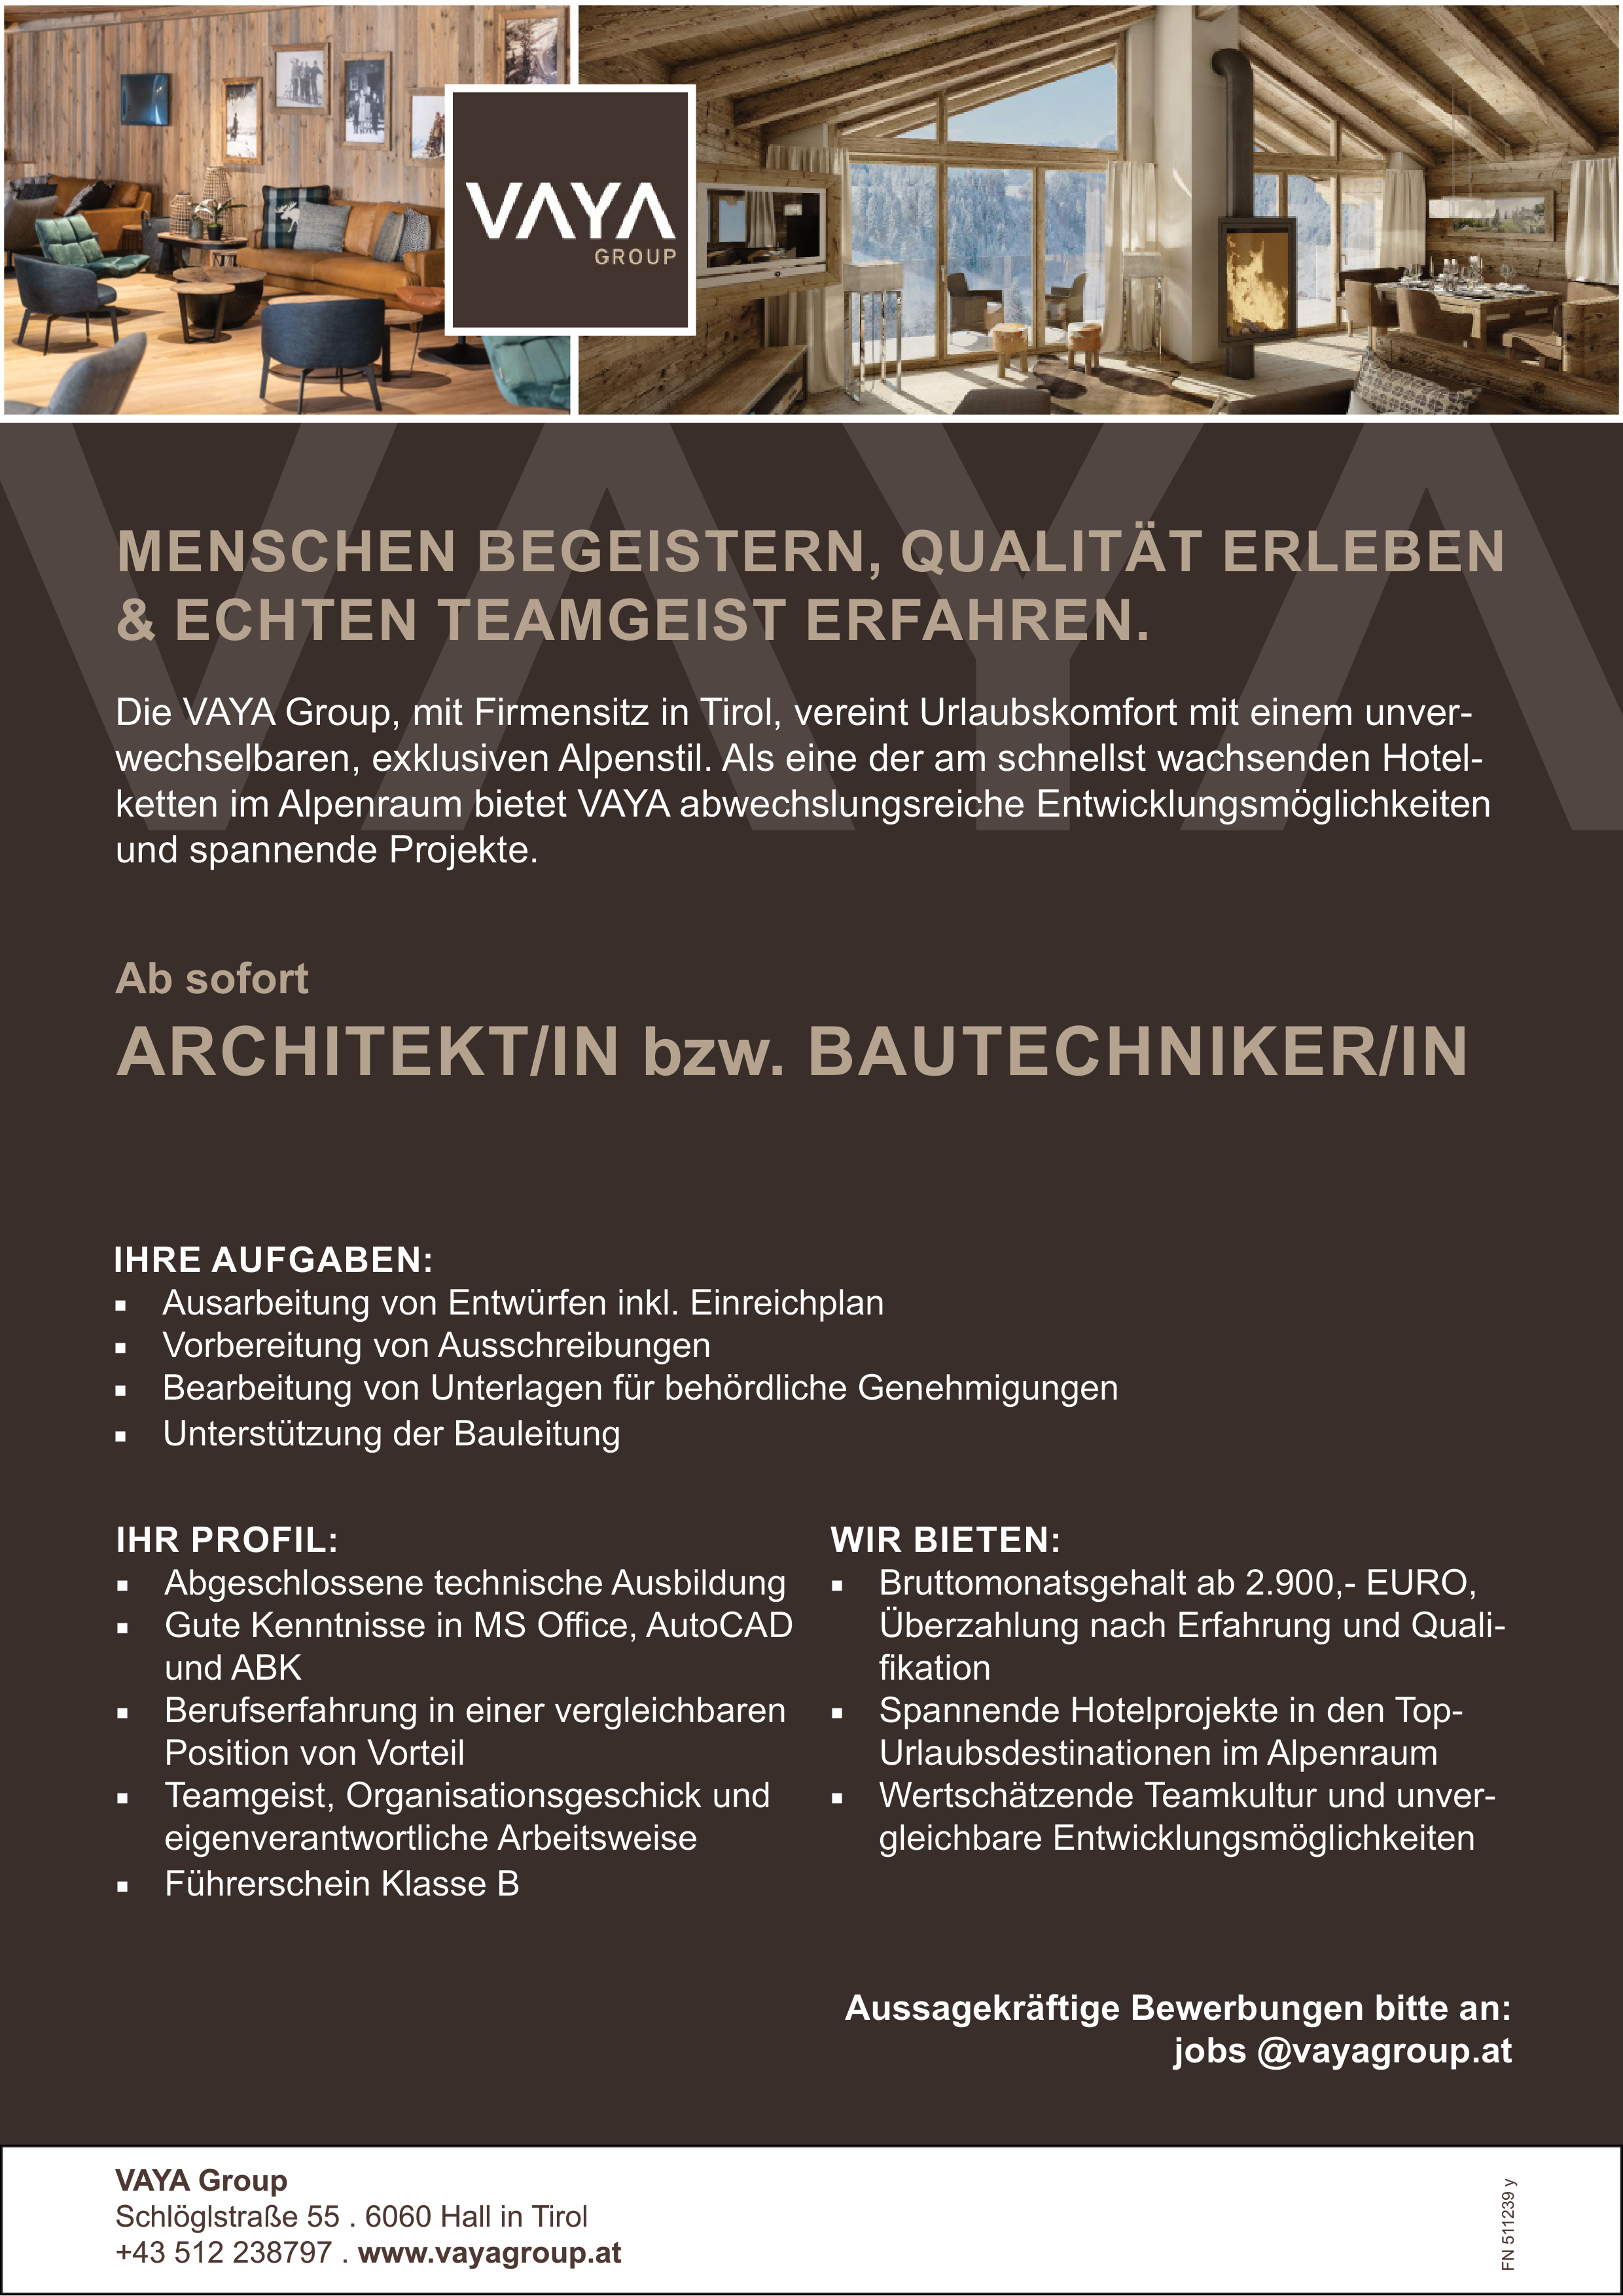 ARCHITEKT/IN bzw. BAUTECHNIKER/IN